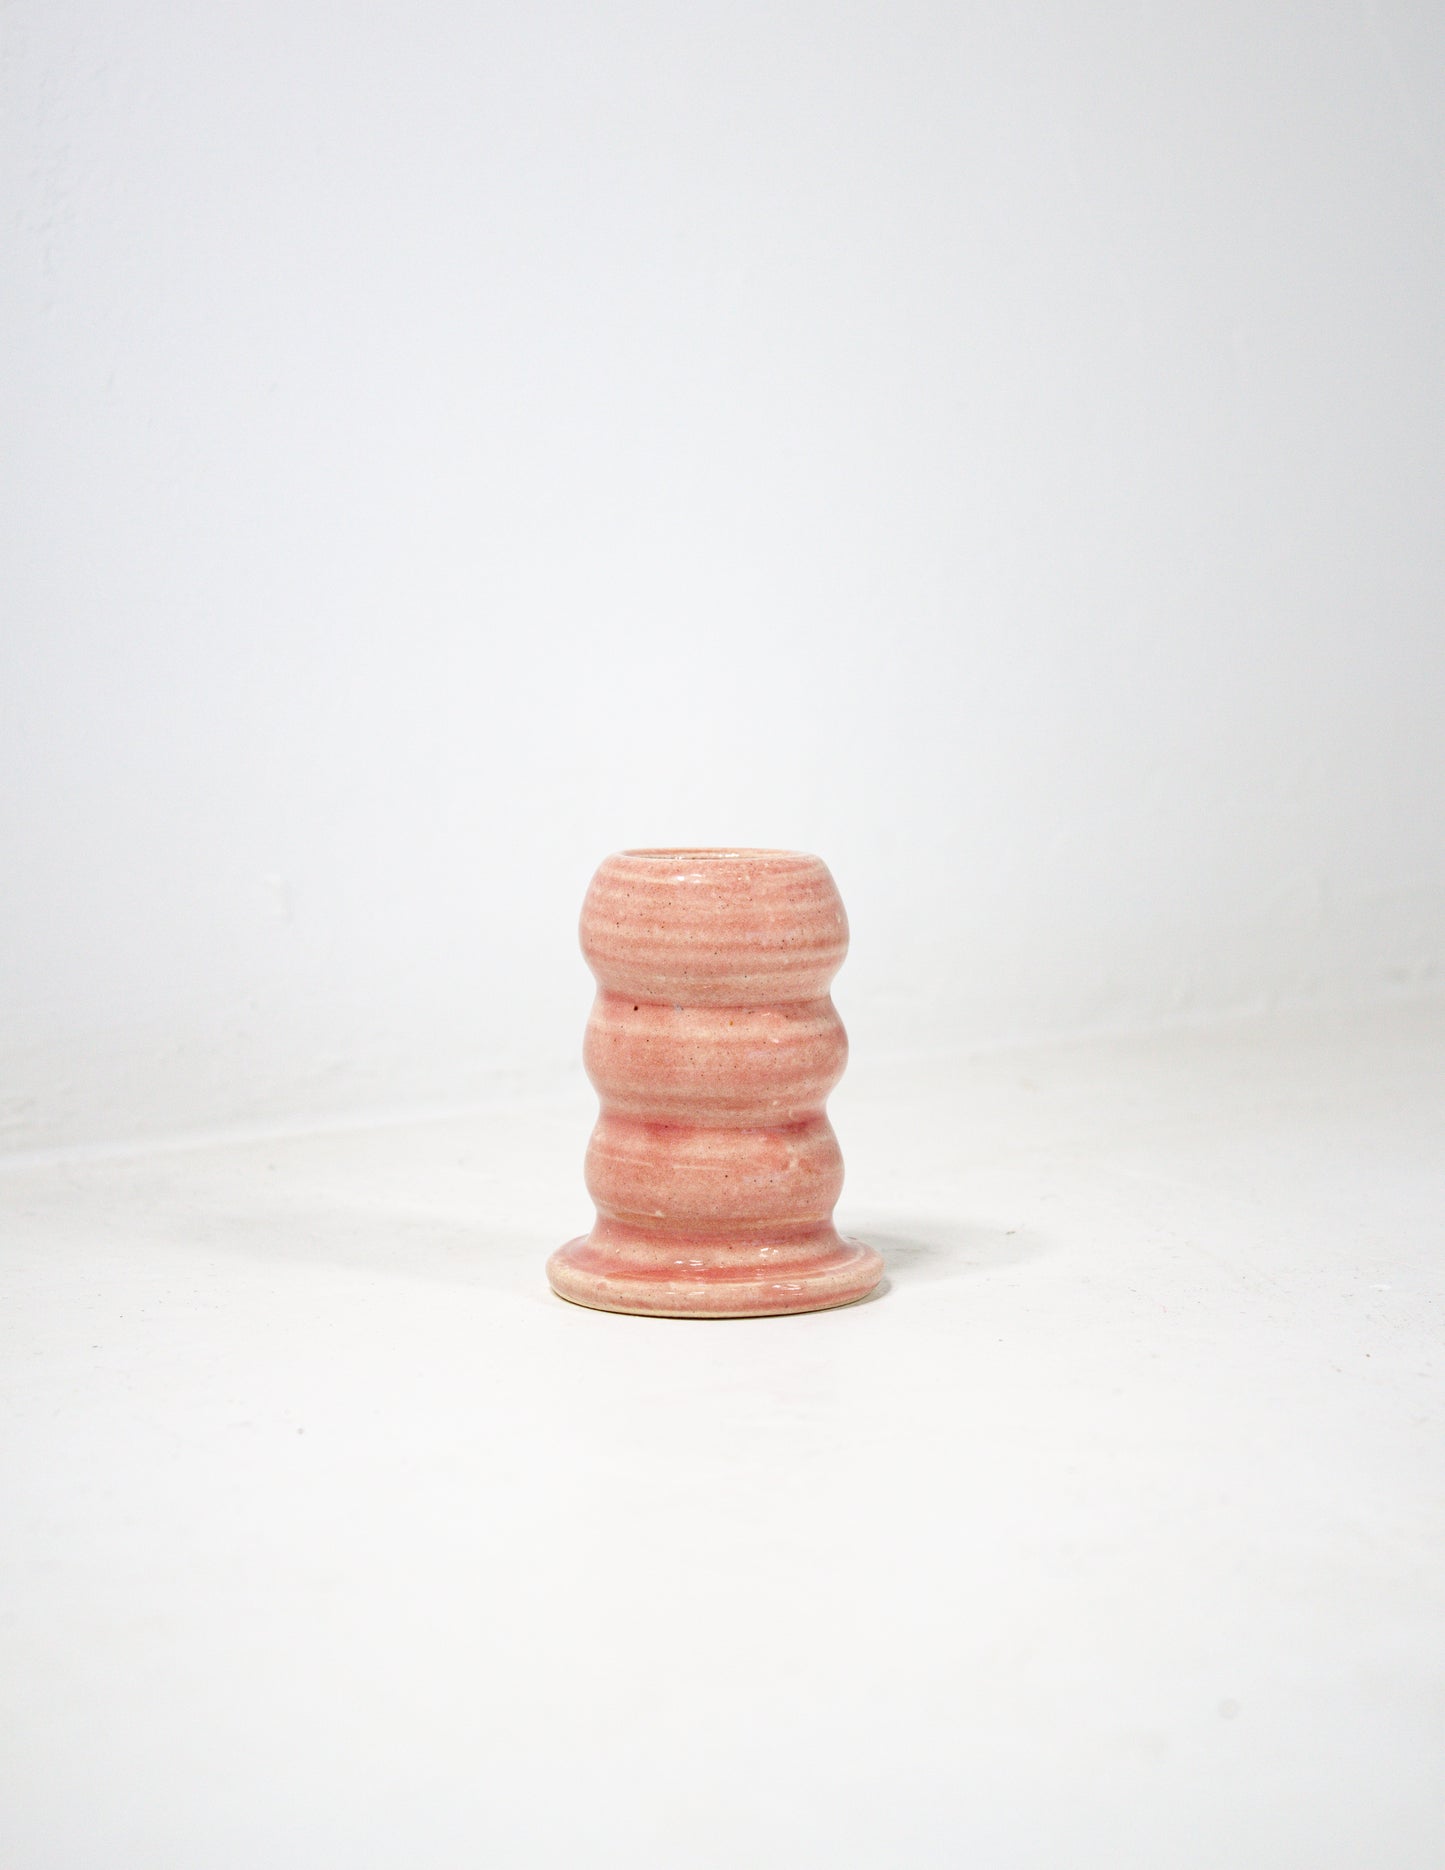 Handmade ceramic candle stick holder in pink glaze